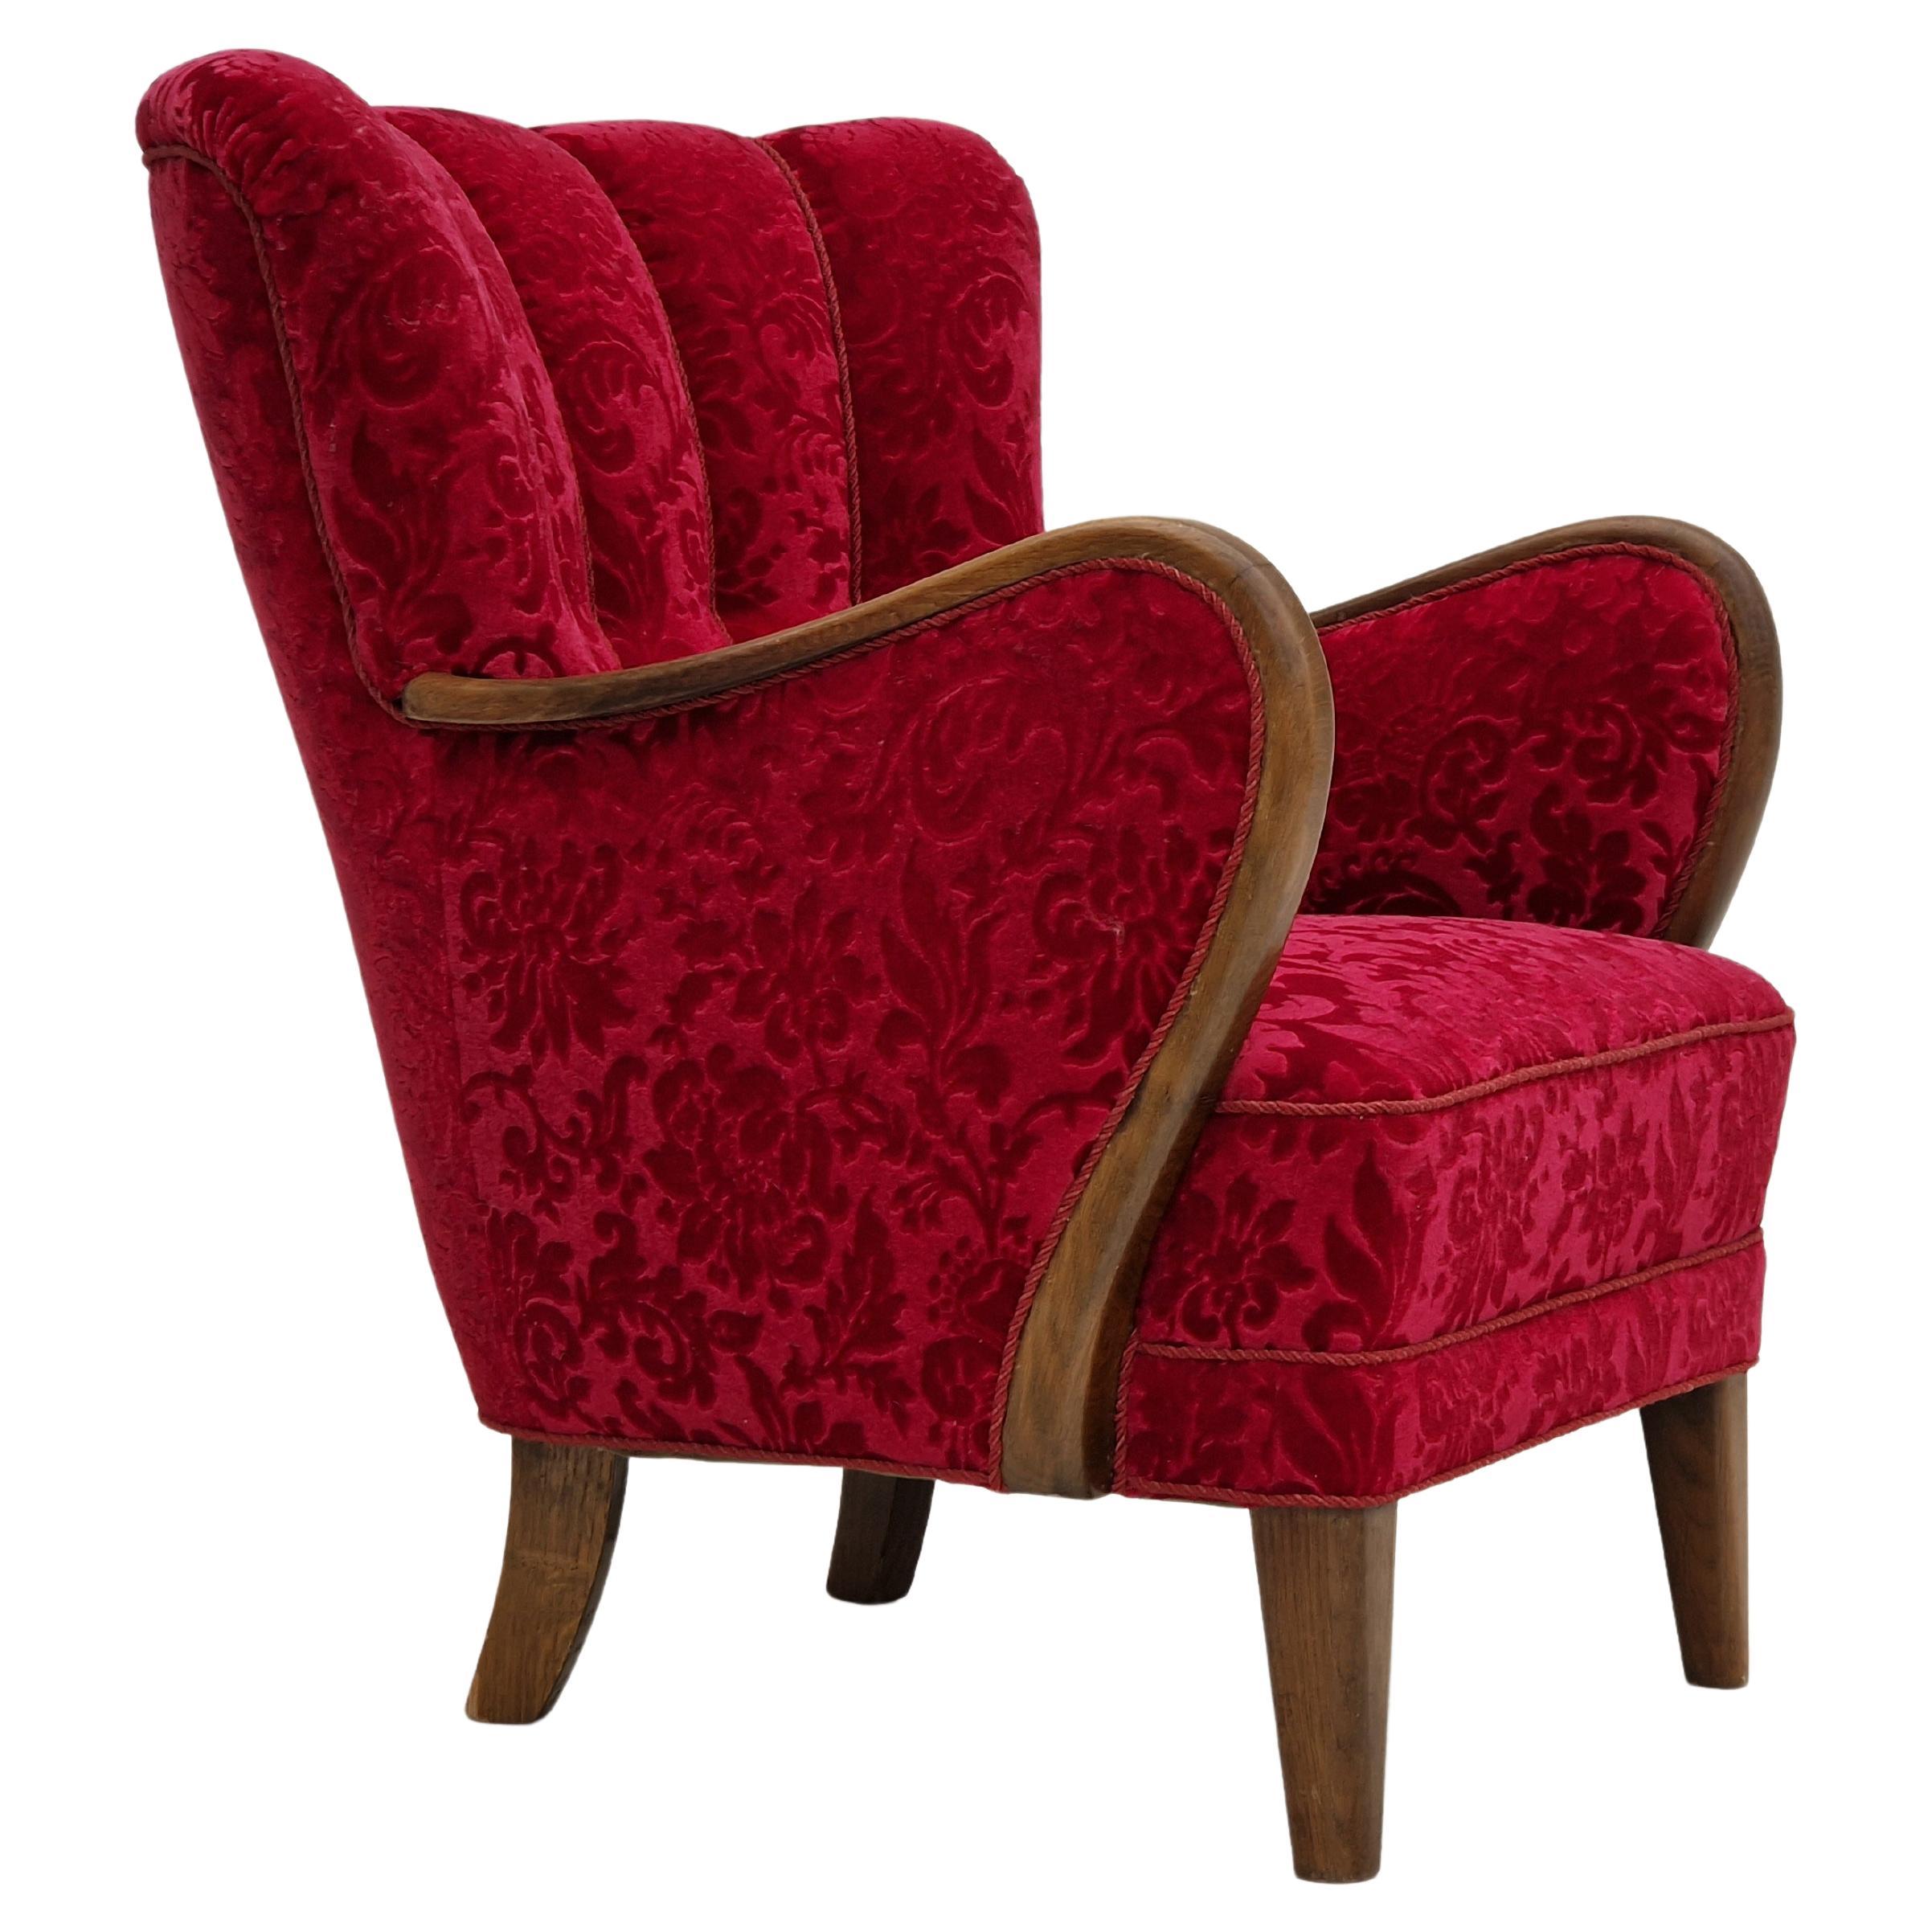 1960s, Danish design by Alfred Christensen, armchair in cherry red fabric.